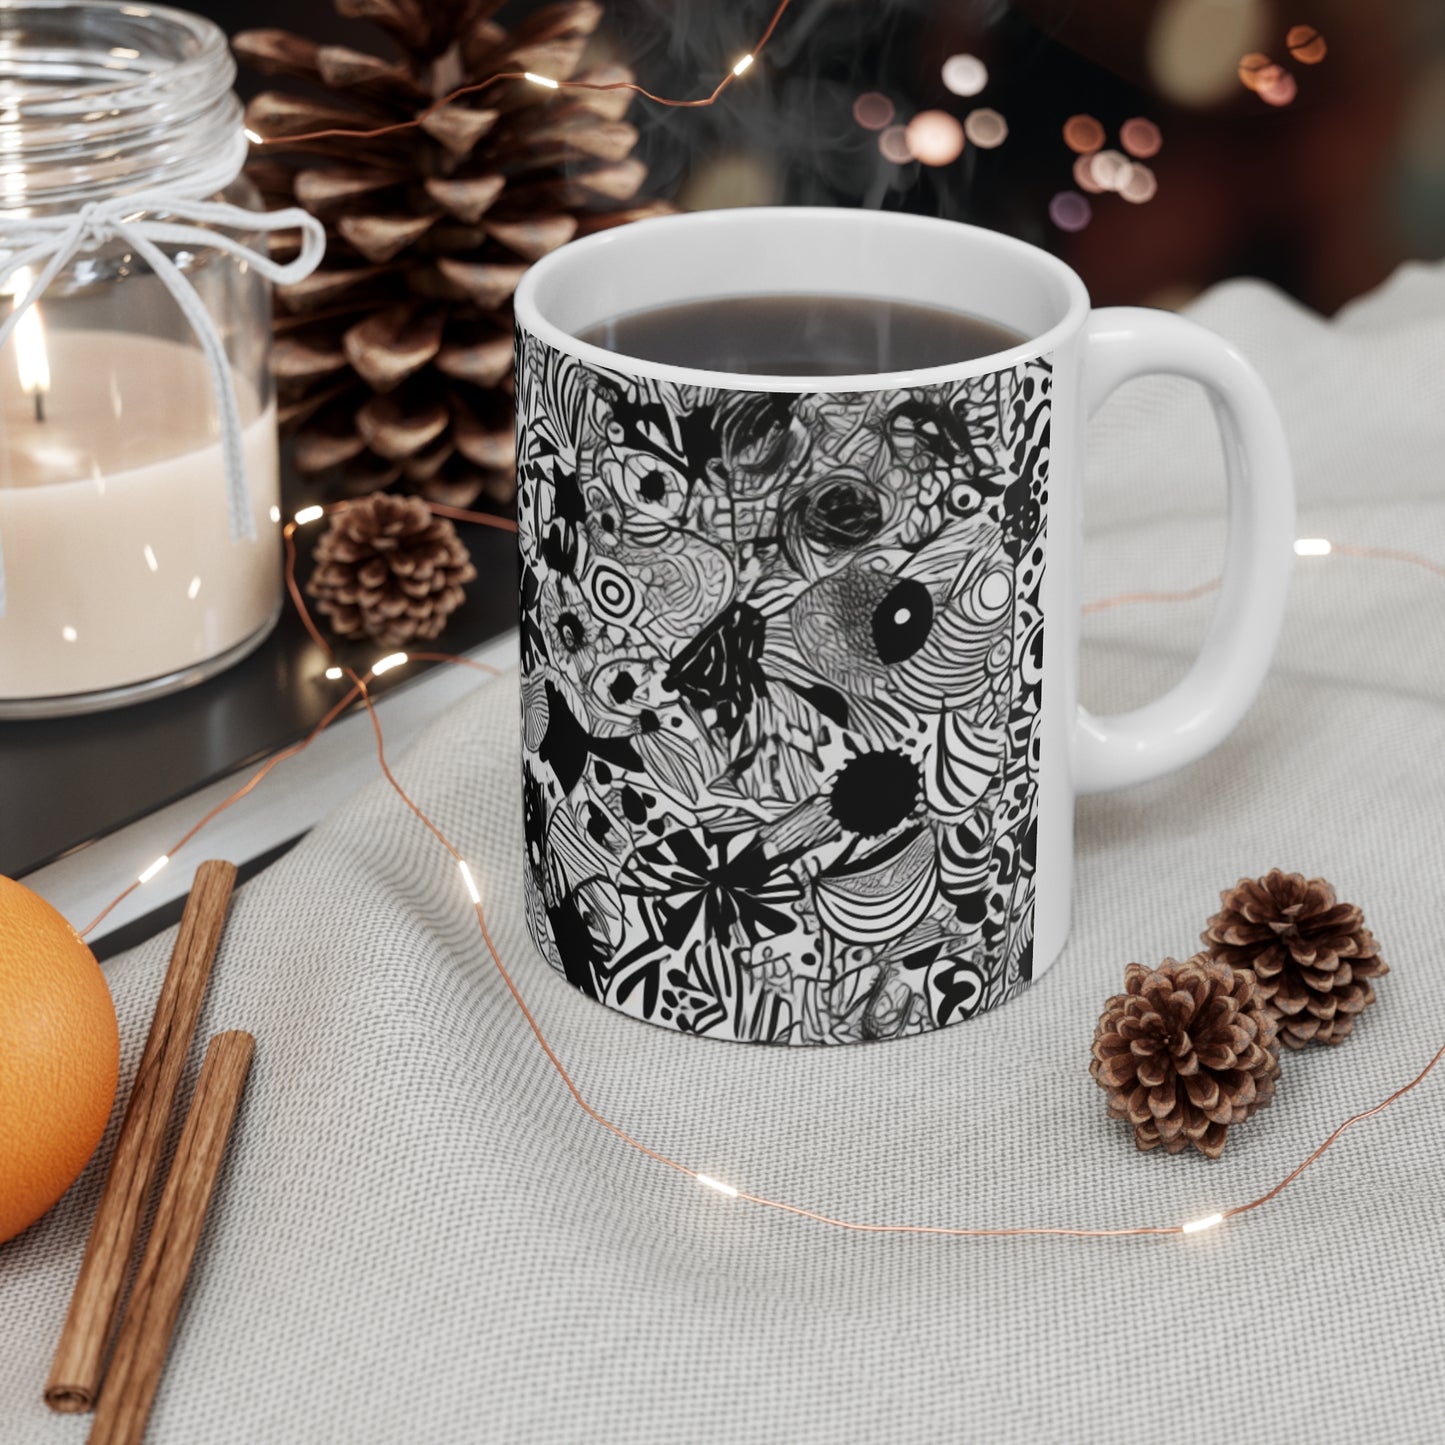 Messy Black and White Patterns - Ceramic Coffee Mug 11oz